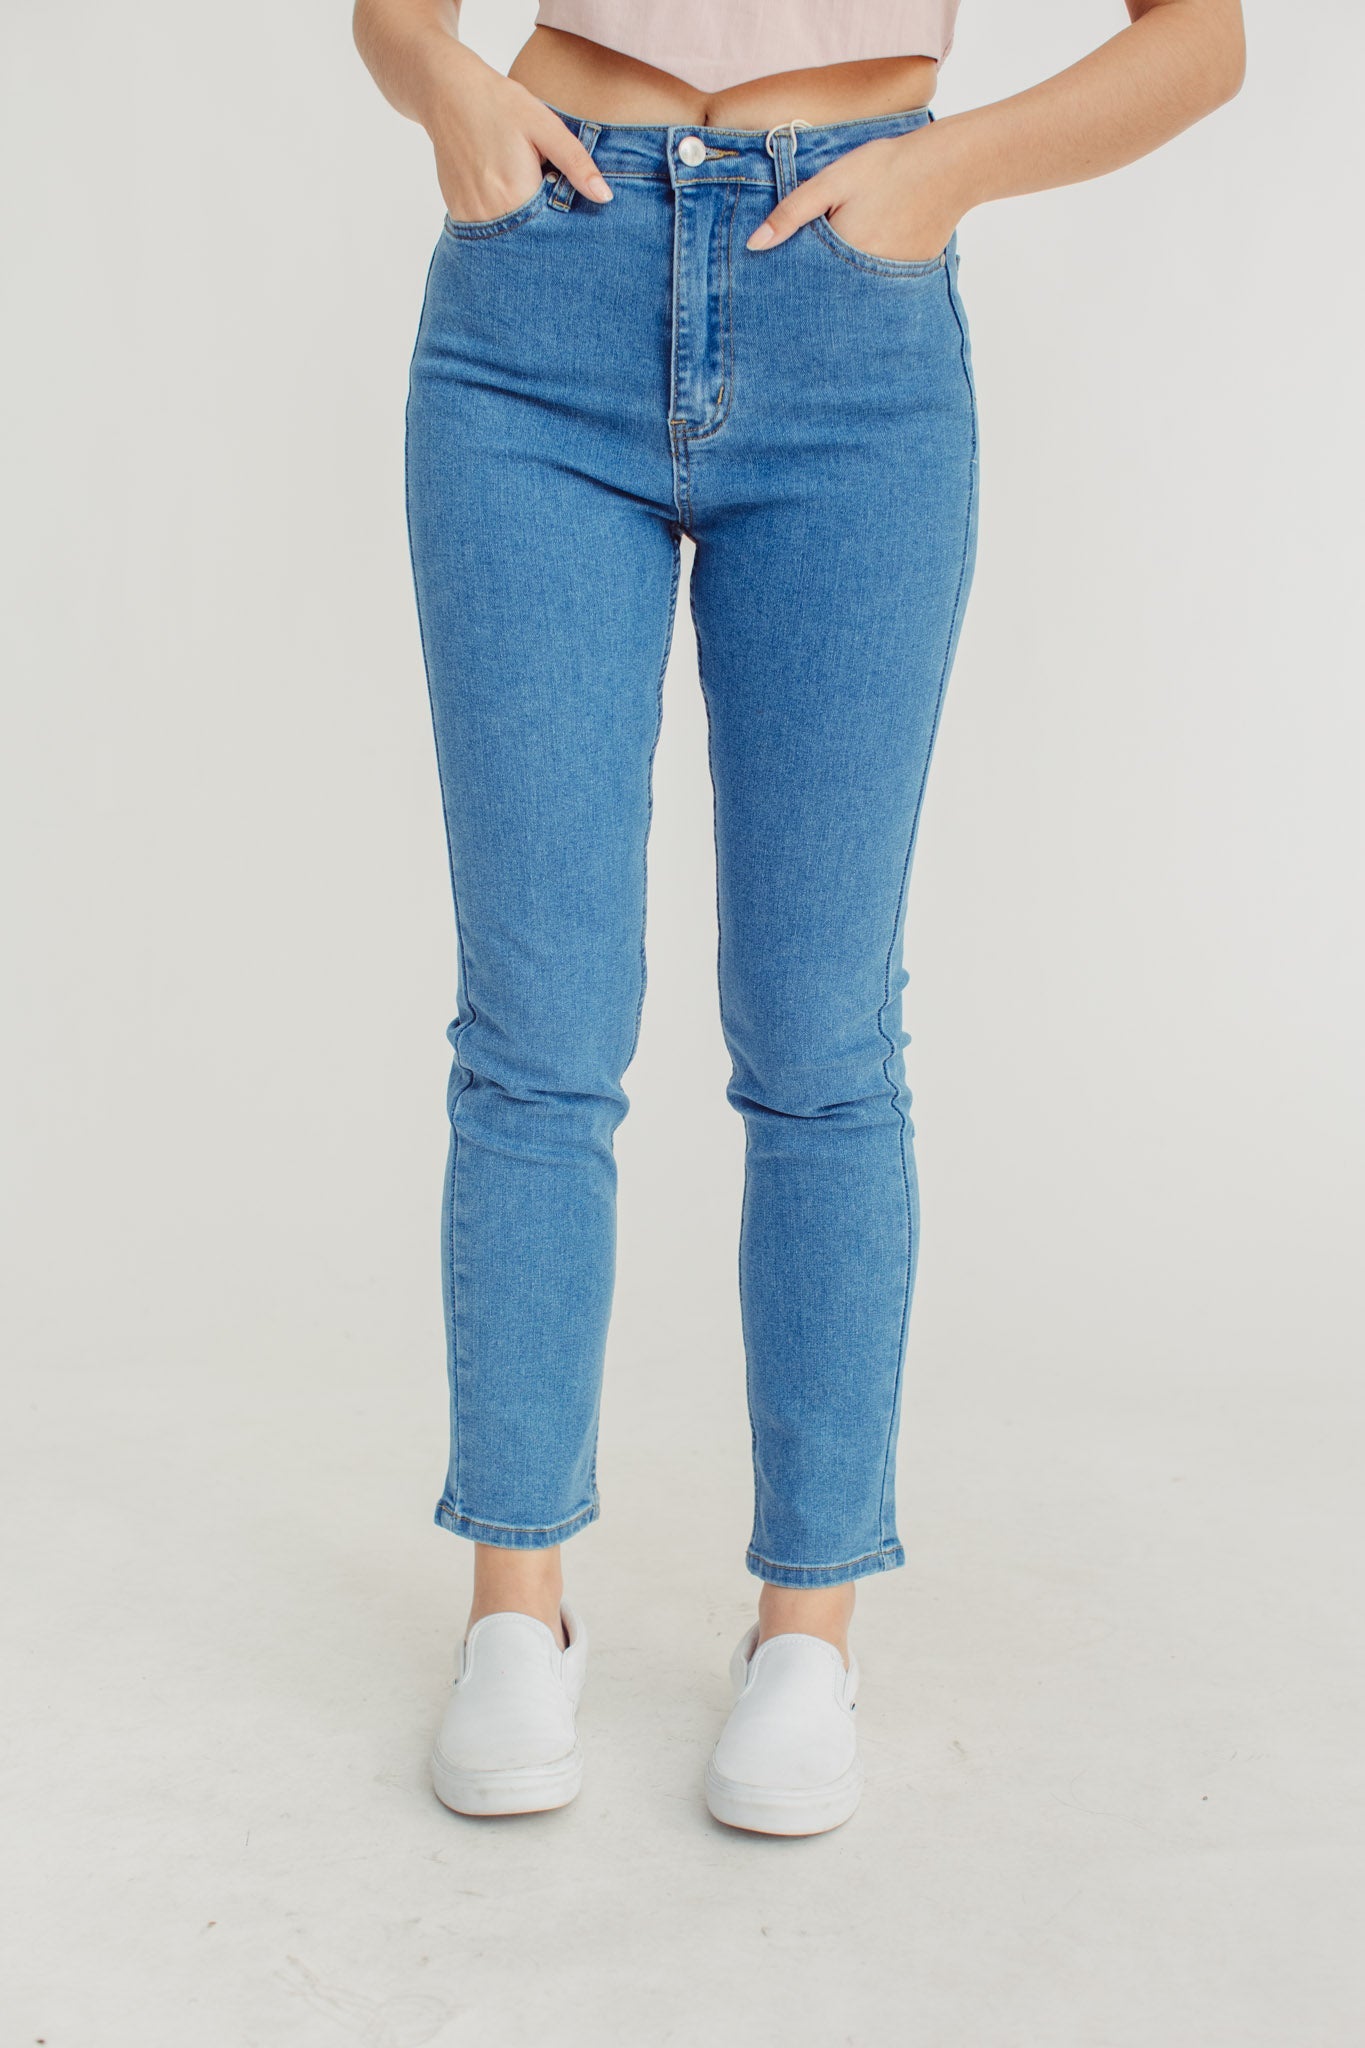 Medium Blue Sraight High Womens Basic Five Pocket Jeans - Mossimo PH